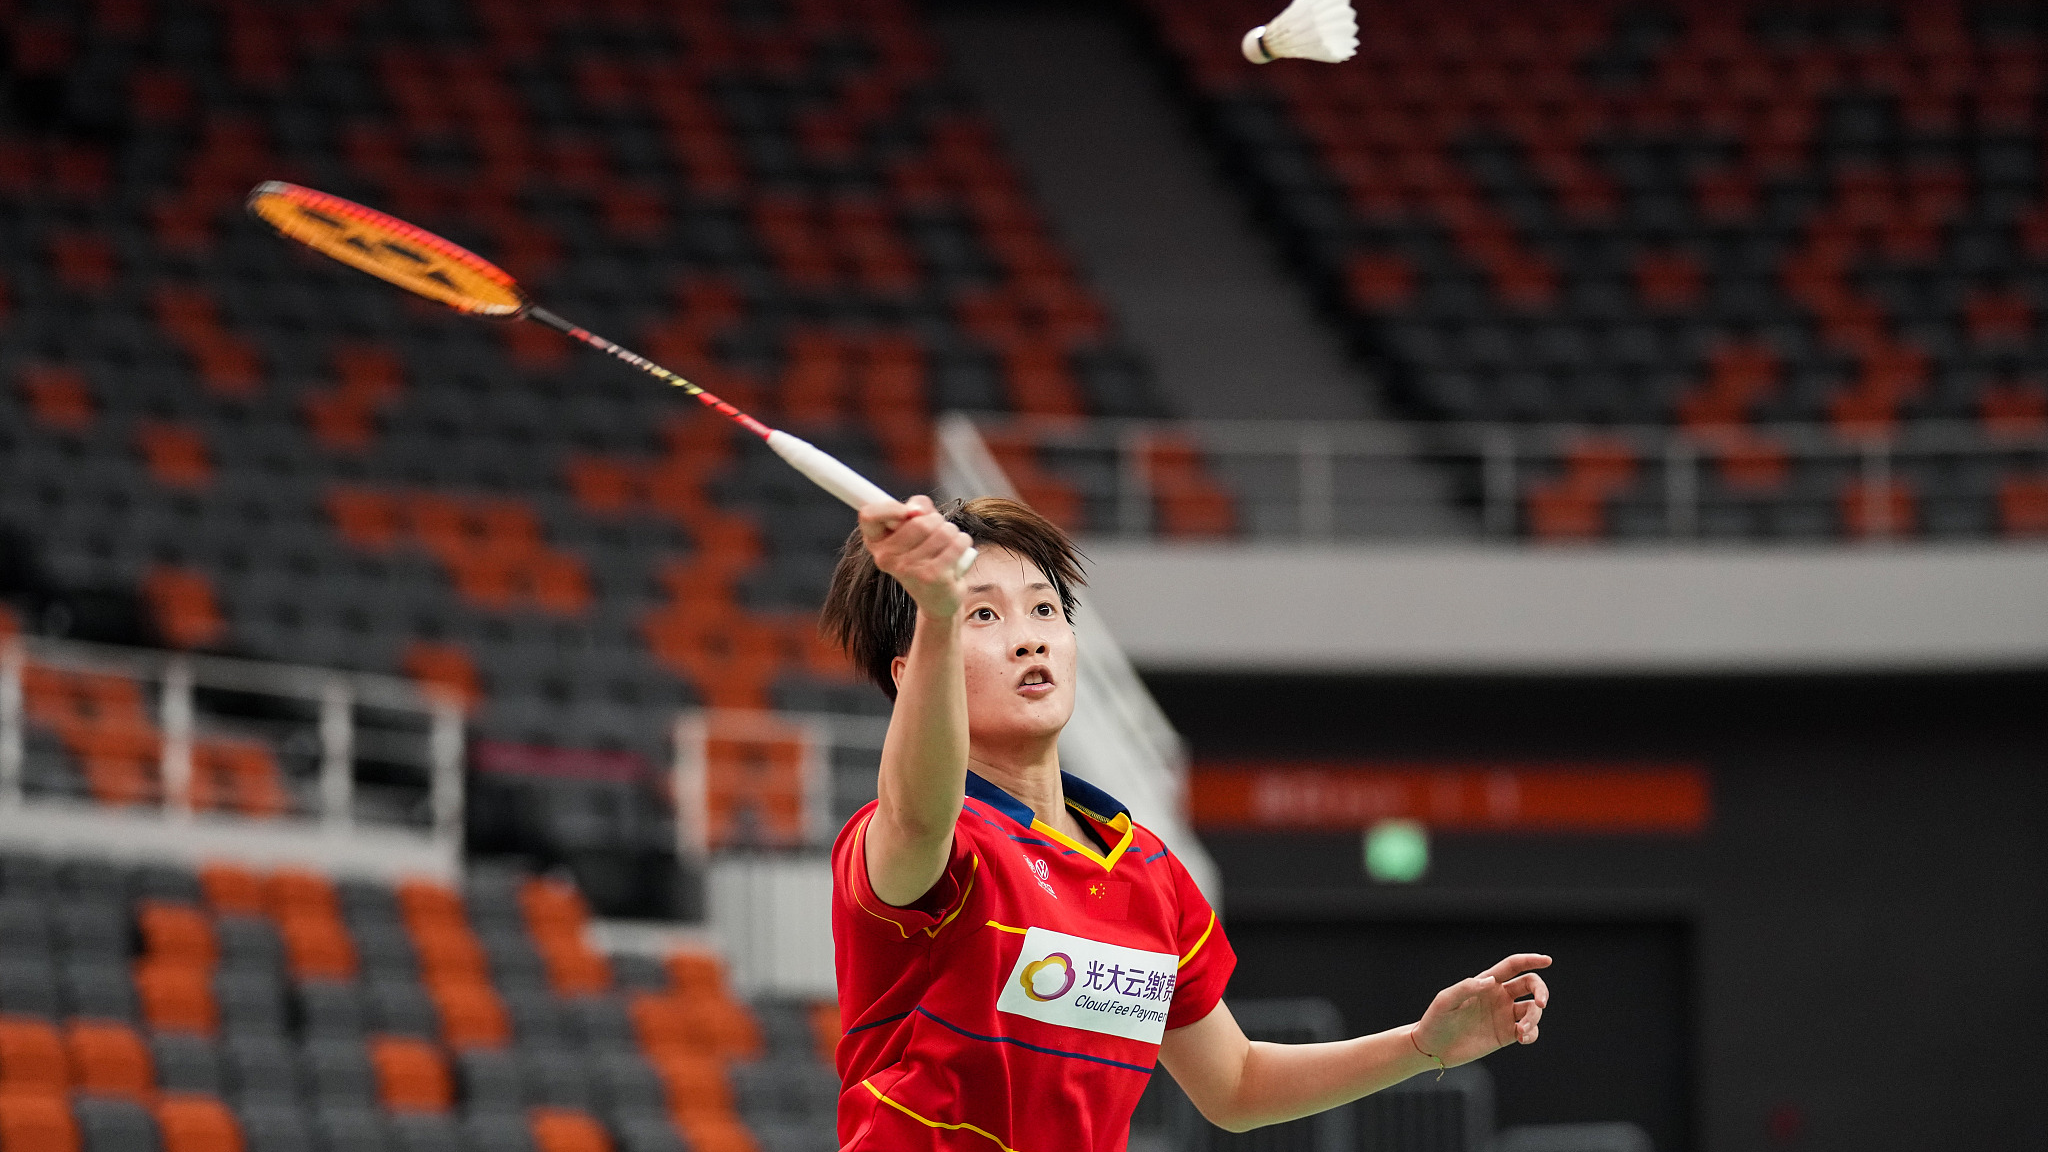 Olympics 2021 badminton draw